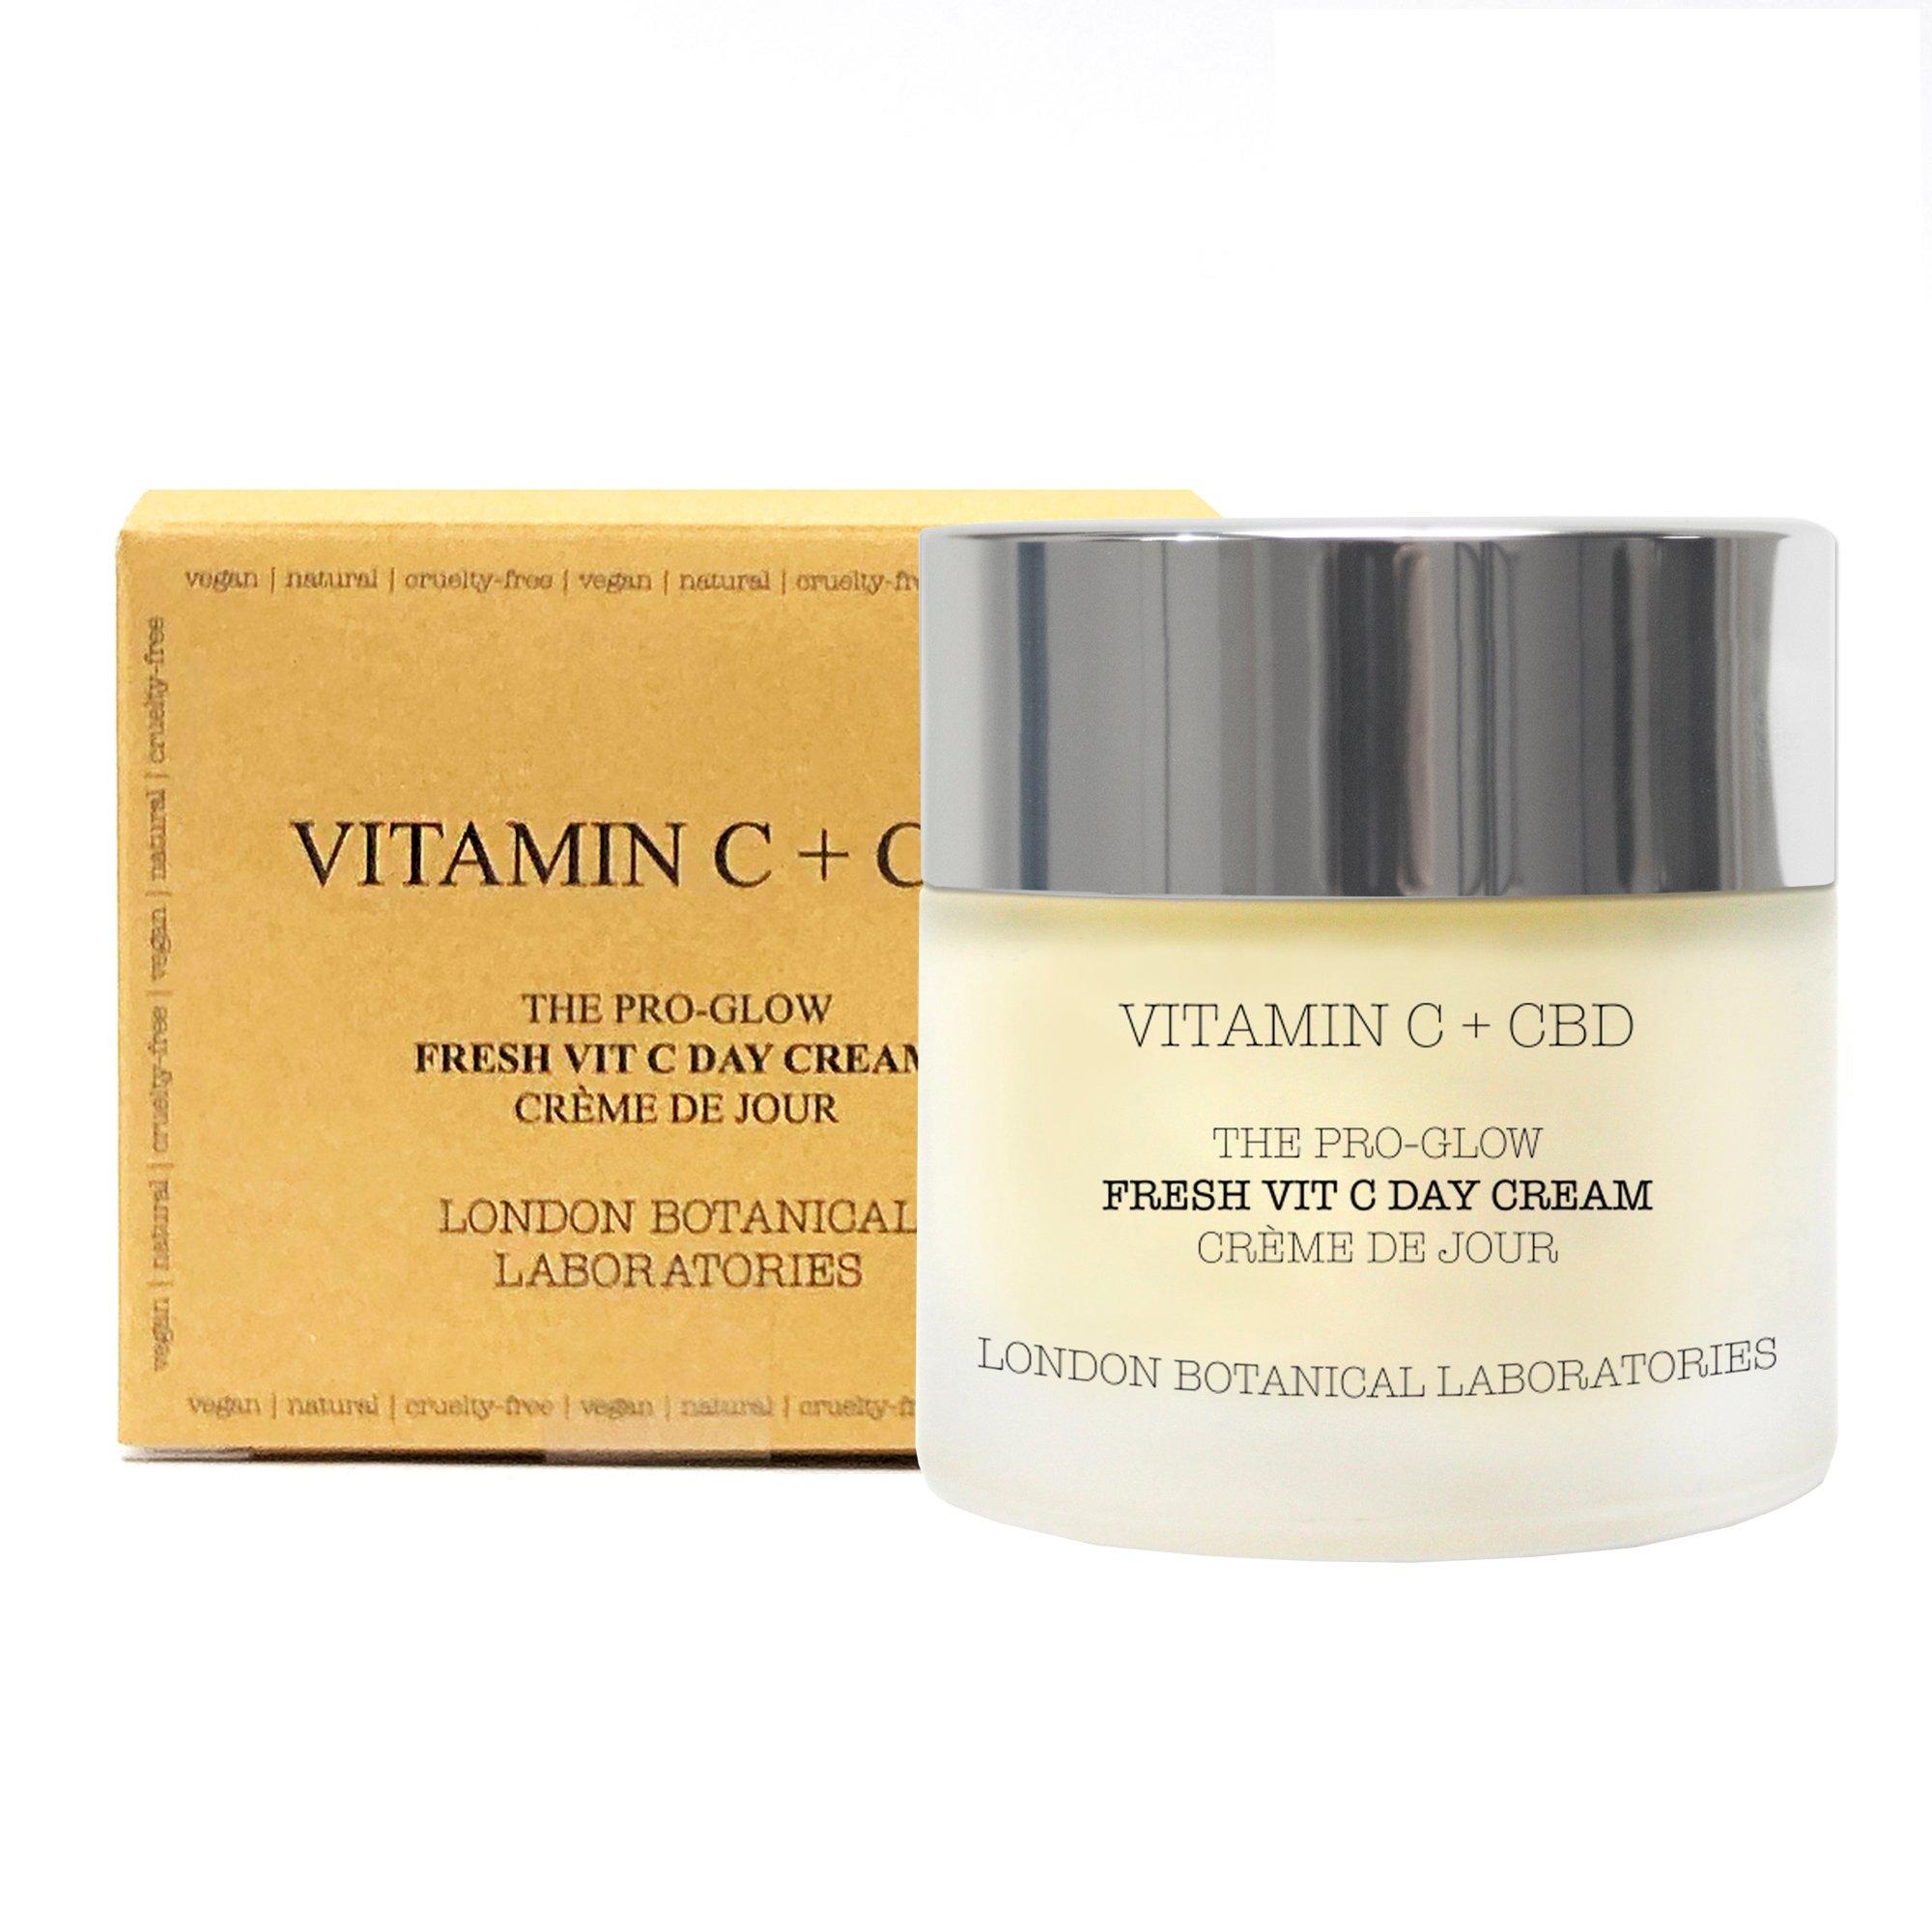 Vitamin c + CBD - The Pro-Glow Fresh Vit C Day Cream 50ml